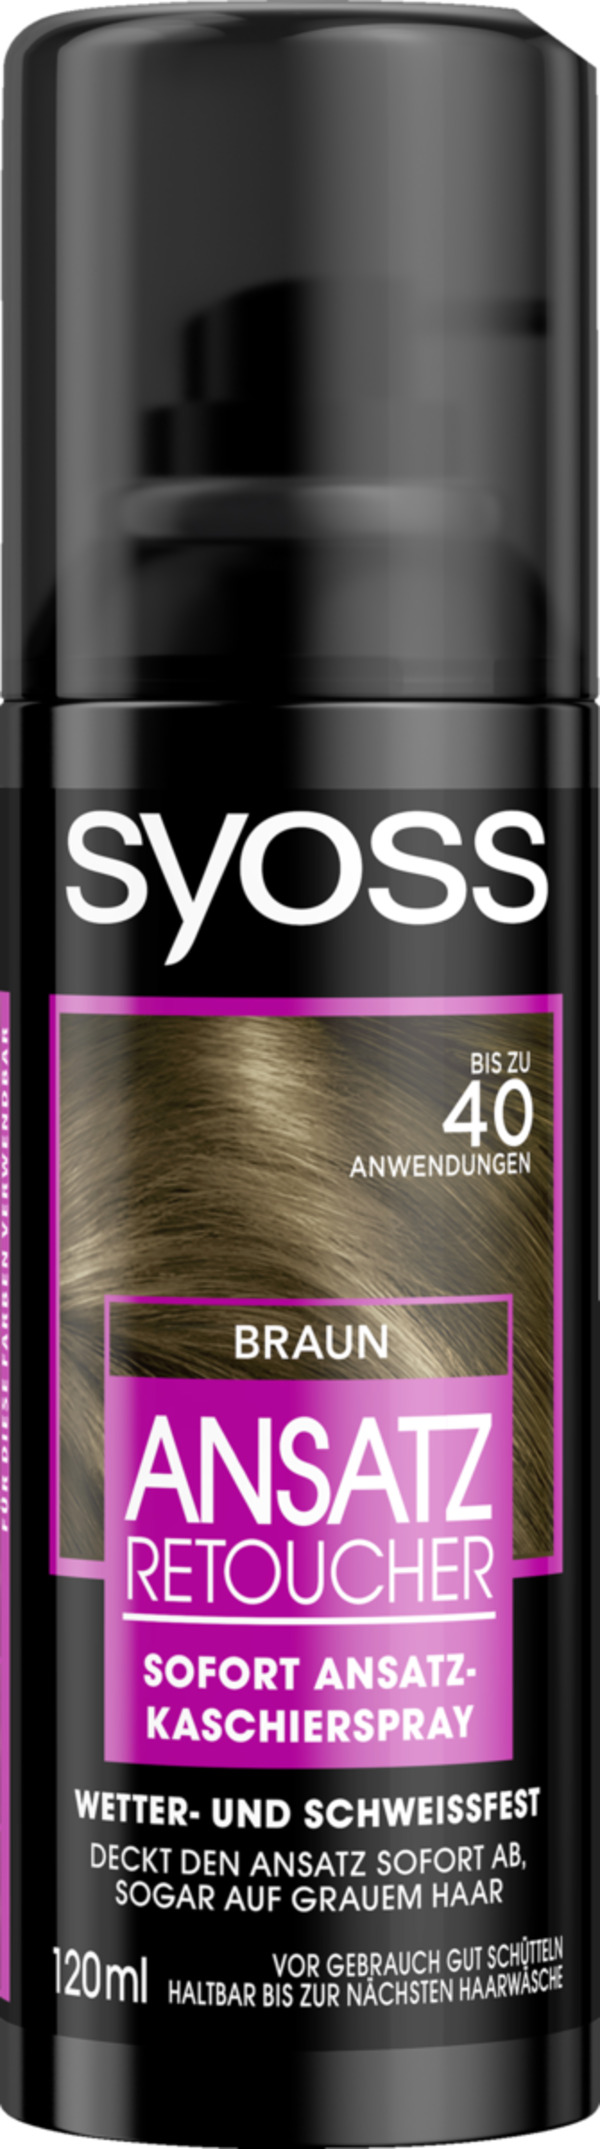 Bild 1 von Syoss Professional Performance Ansatz Retoucher Sofort 4.58 EUR/100 ml